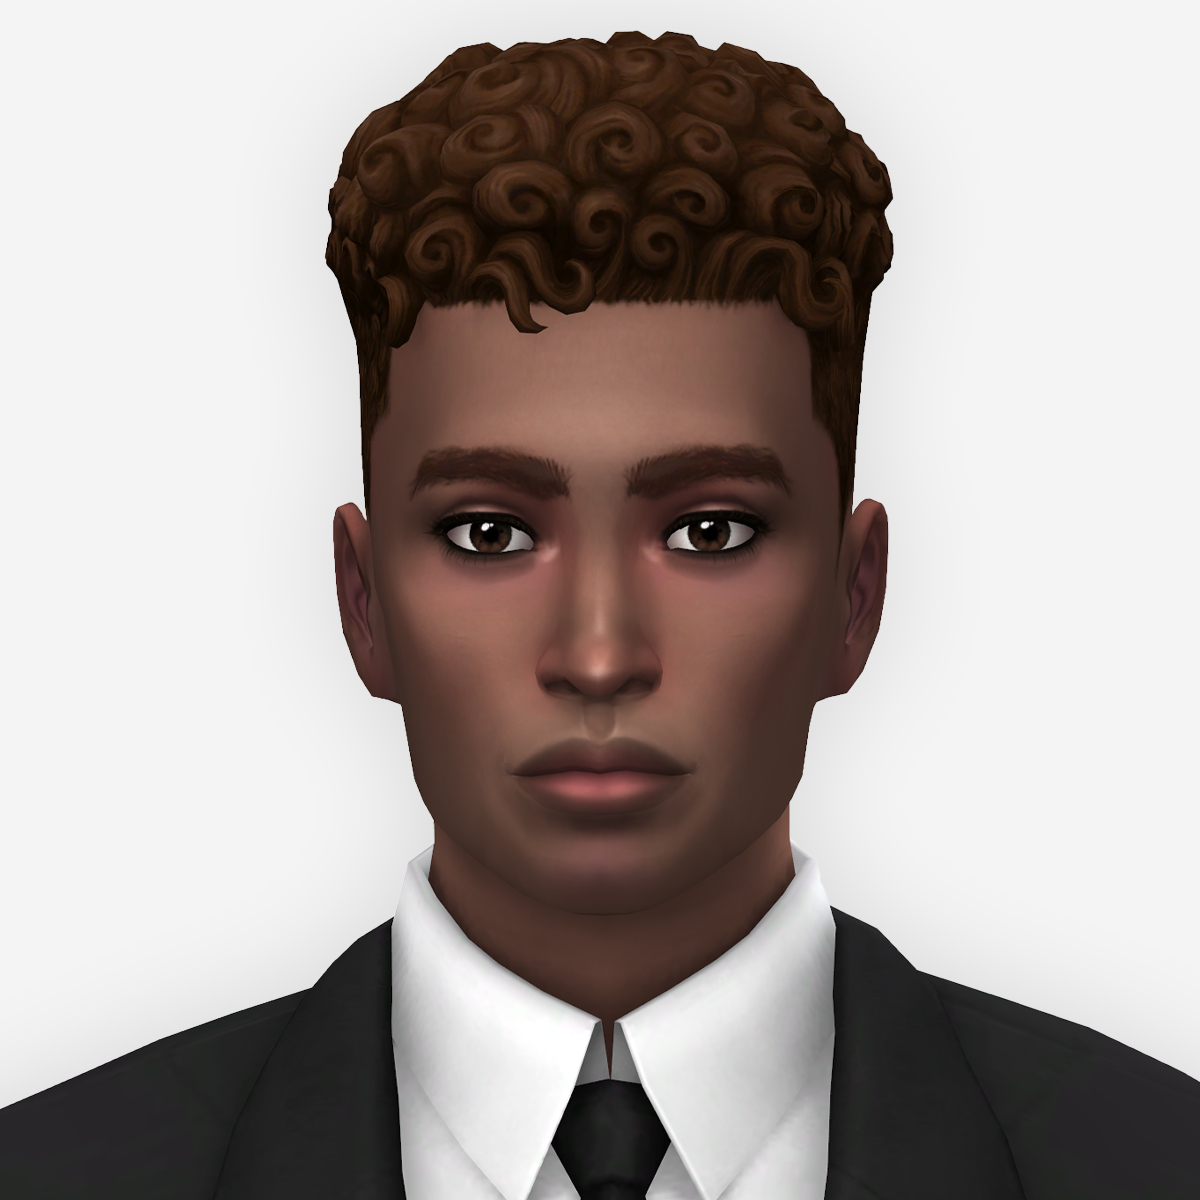 QICC - Jordan Hair project avatar